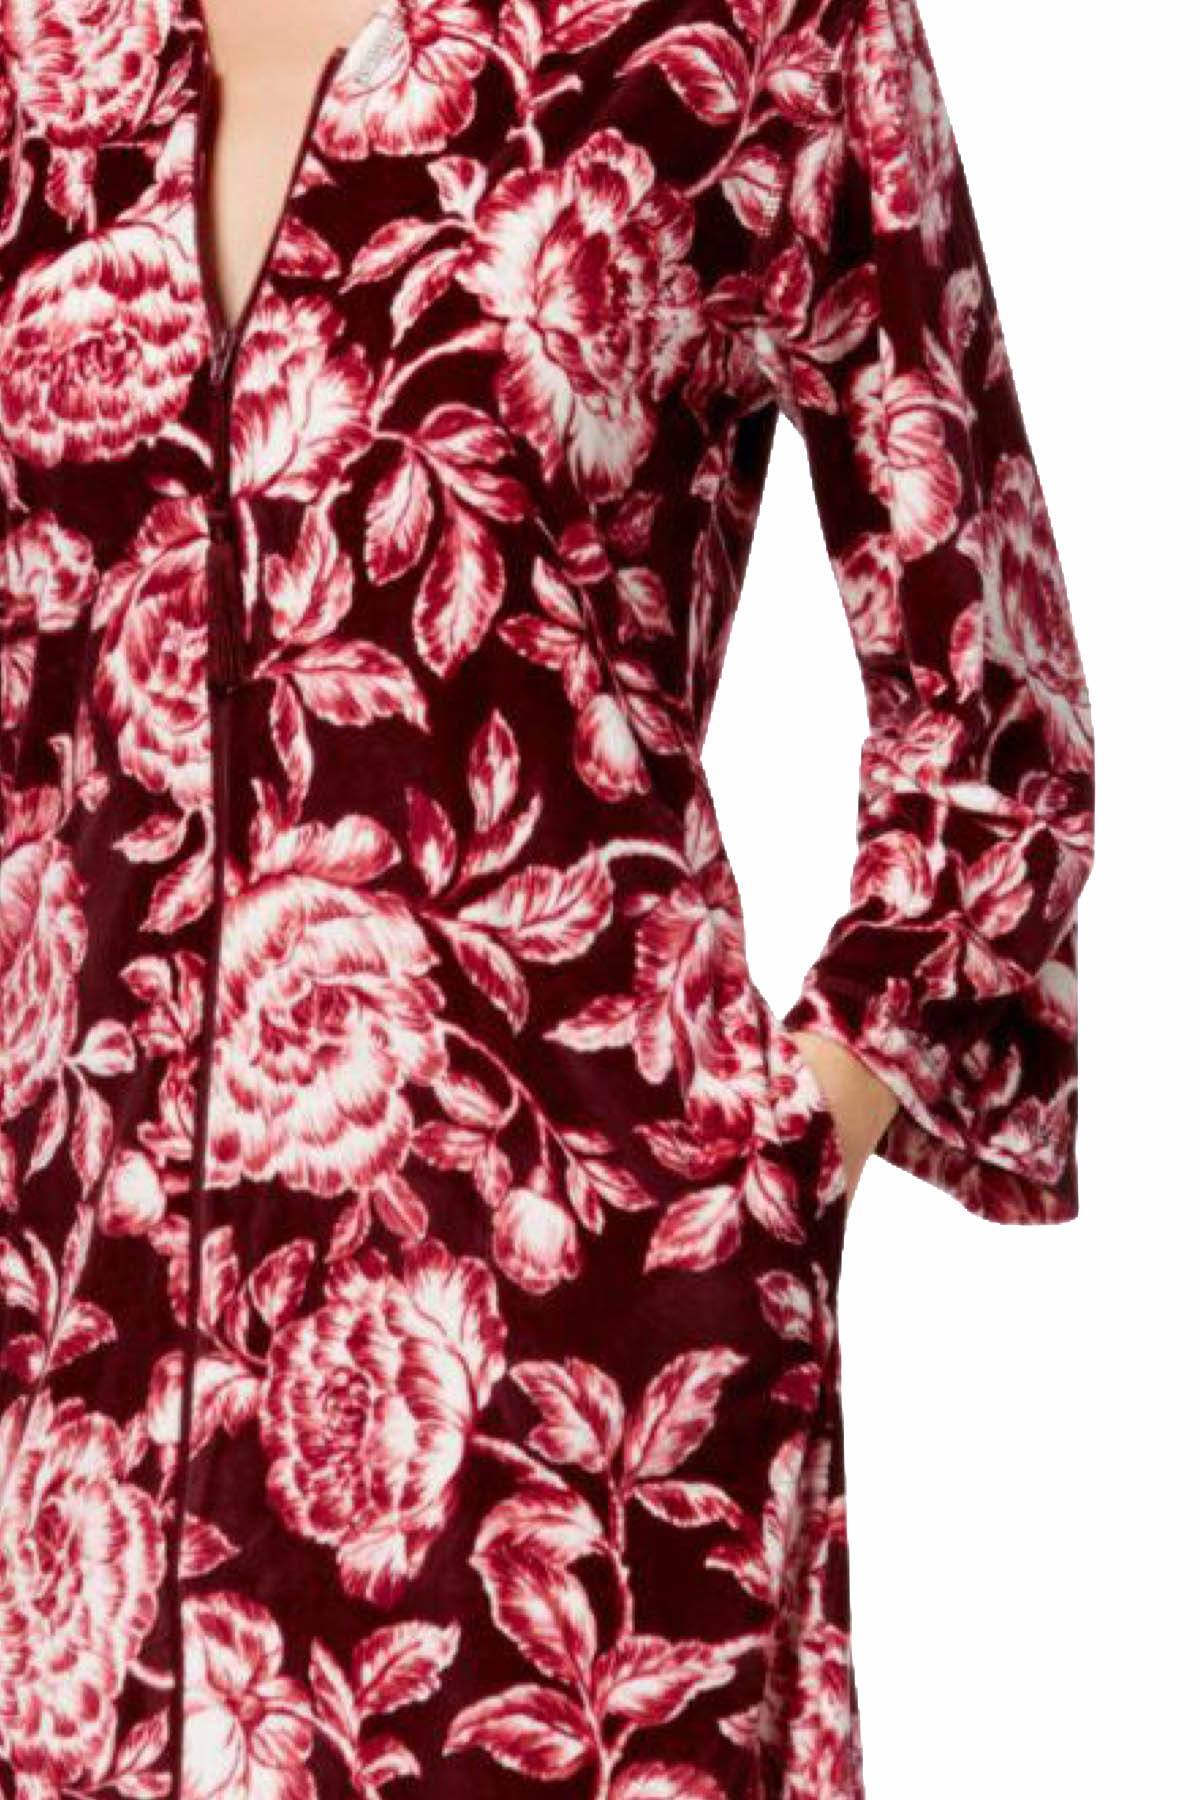 Miss Elaine Pink/Wine Velour-Knit Floral-Print Robe